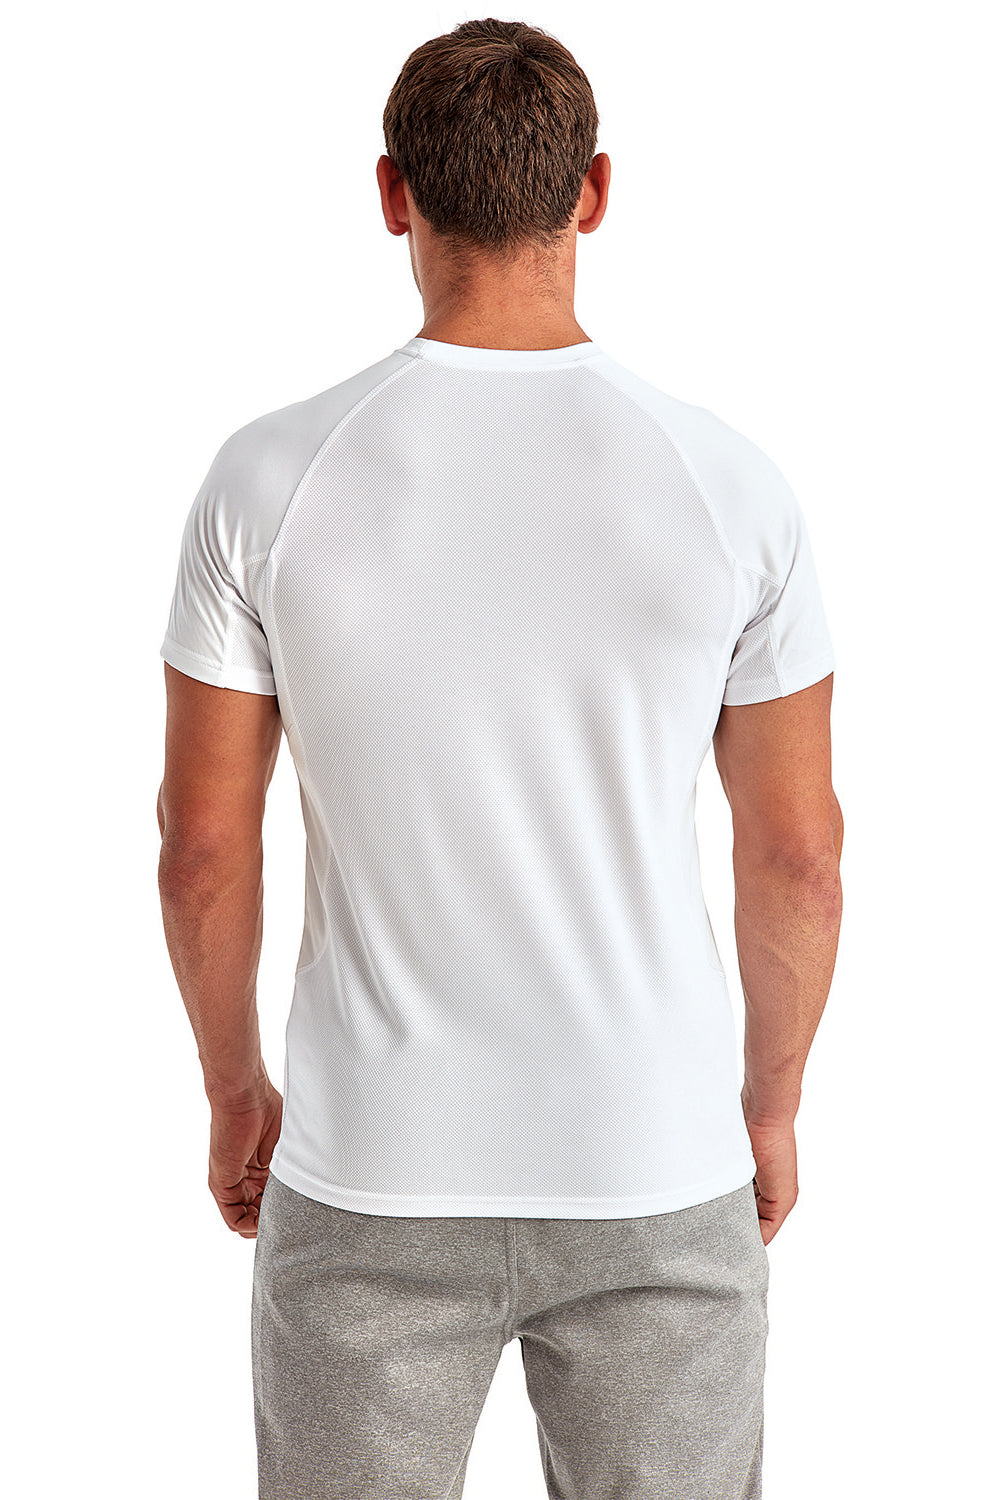 TriDri TD011 Mens Panelled Tech Moisture Wicking Short Sleeve Crewneck T-Shirt White Back